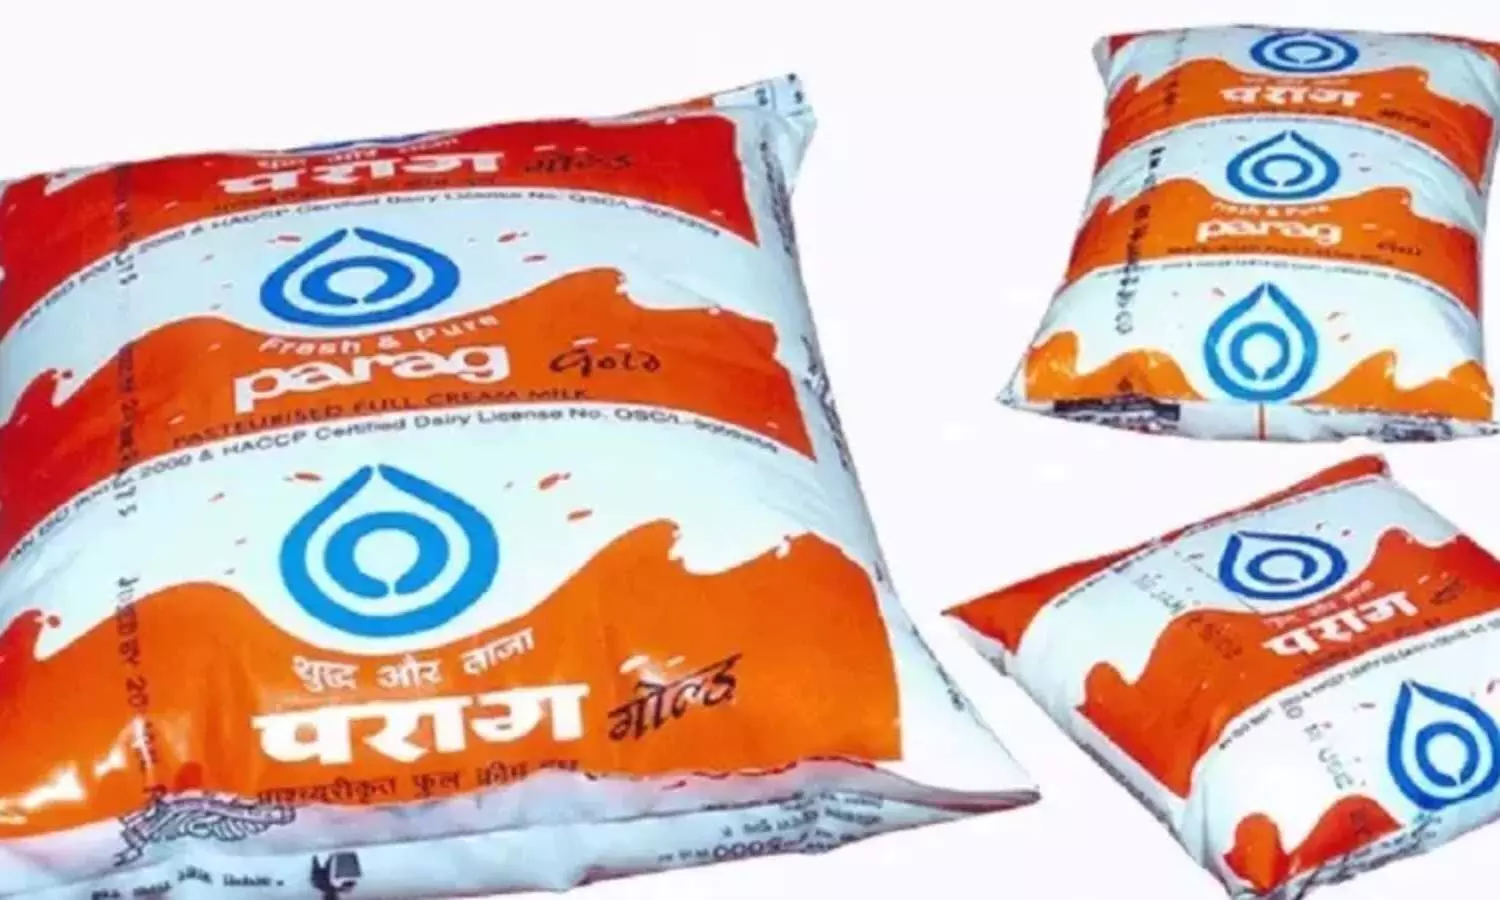 Lucknow Parag milk price three rupees per liter increase